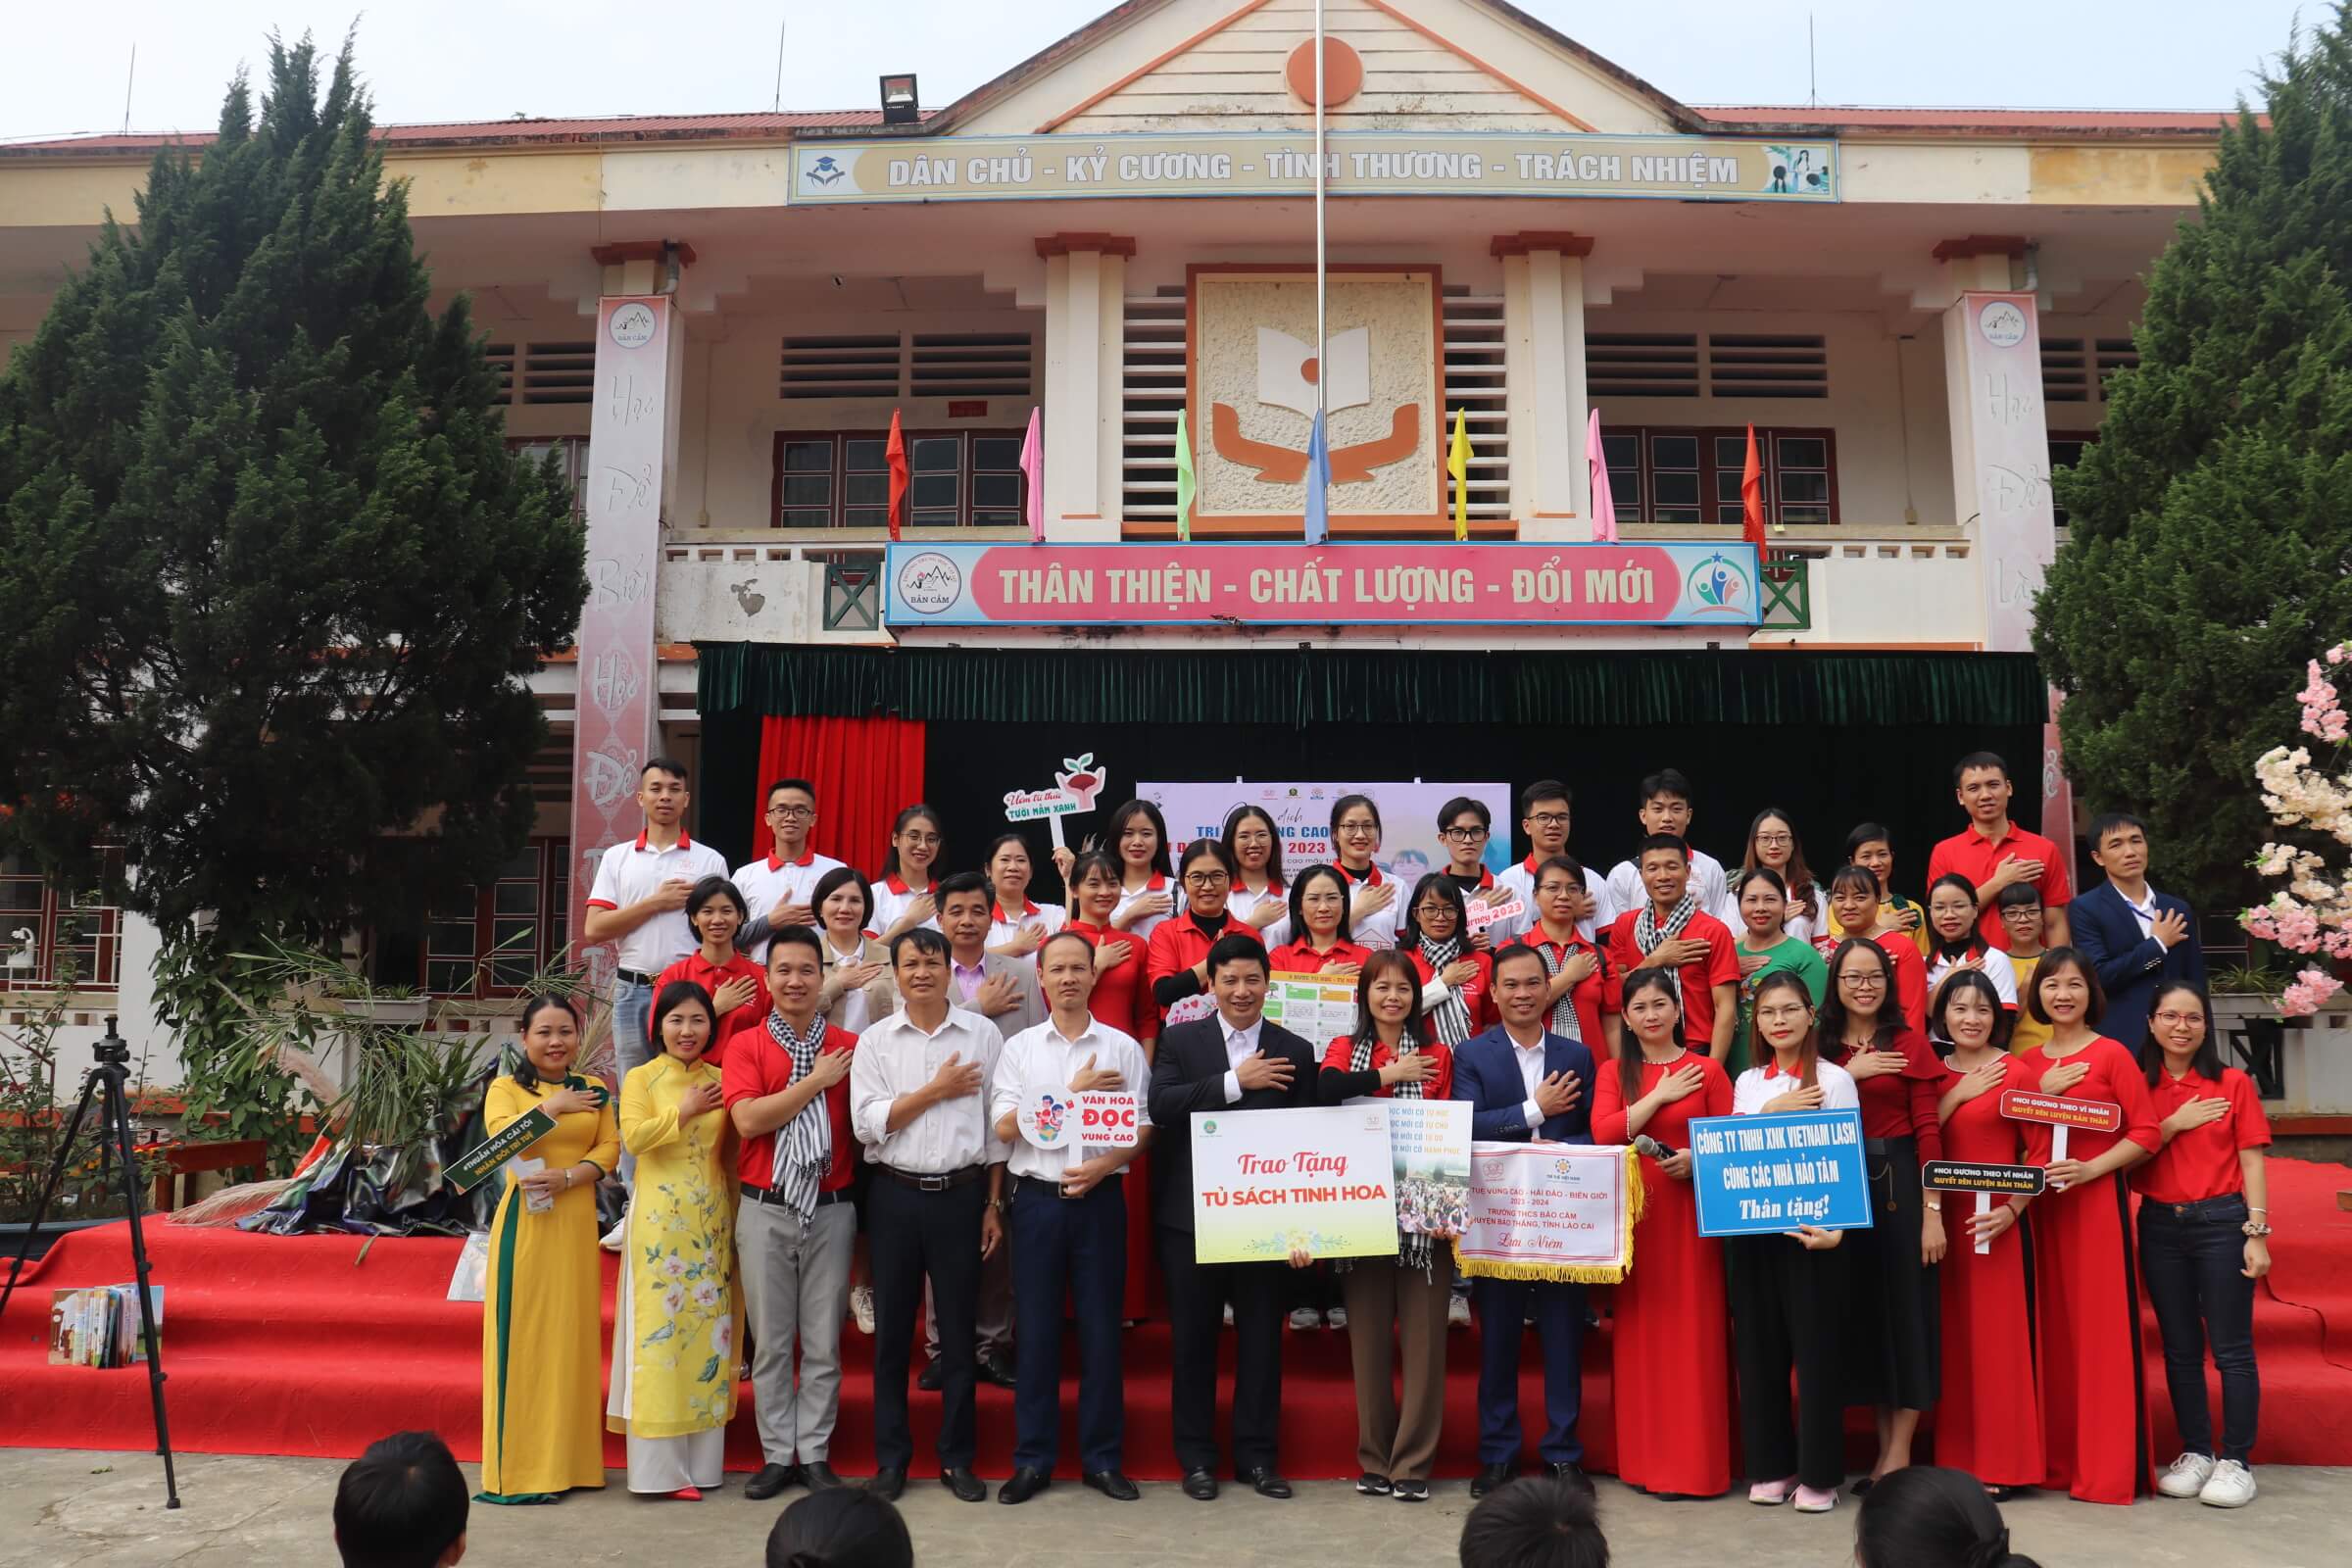 Vietnam Lash and Faculty of Ban Cam Commune Secondary School